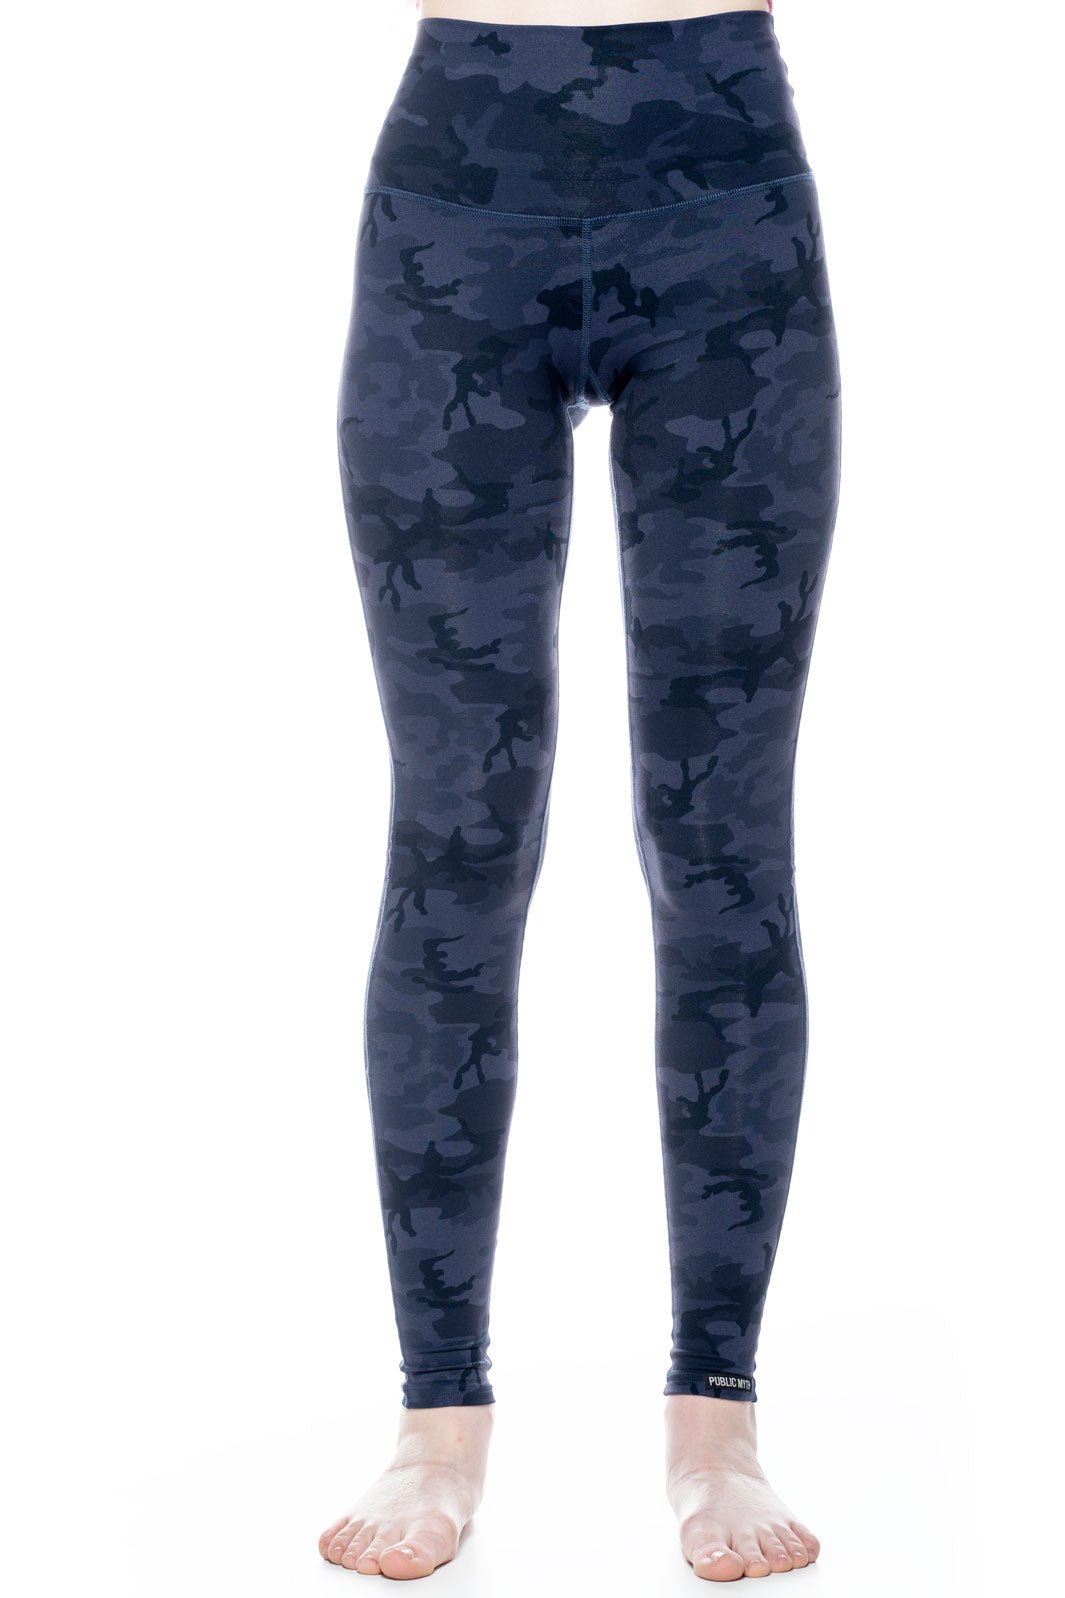 Blue camouflage leggings high waist